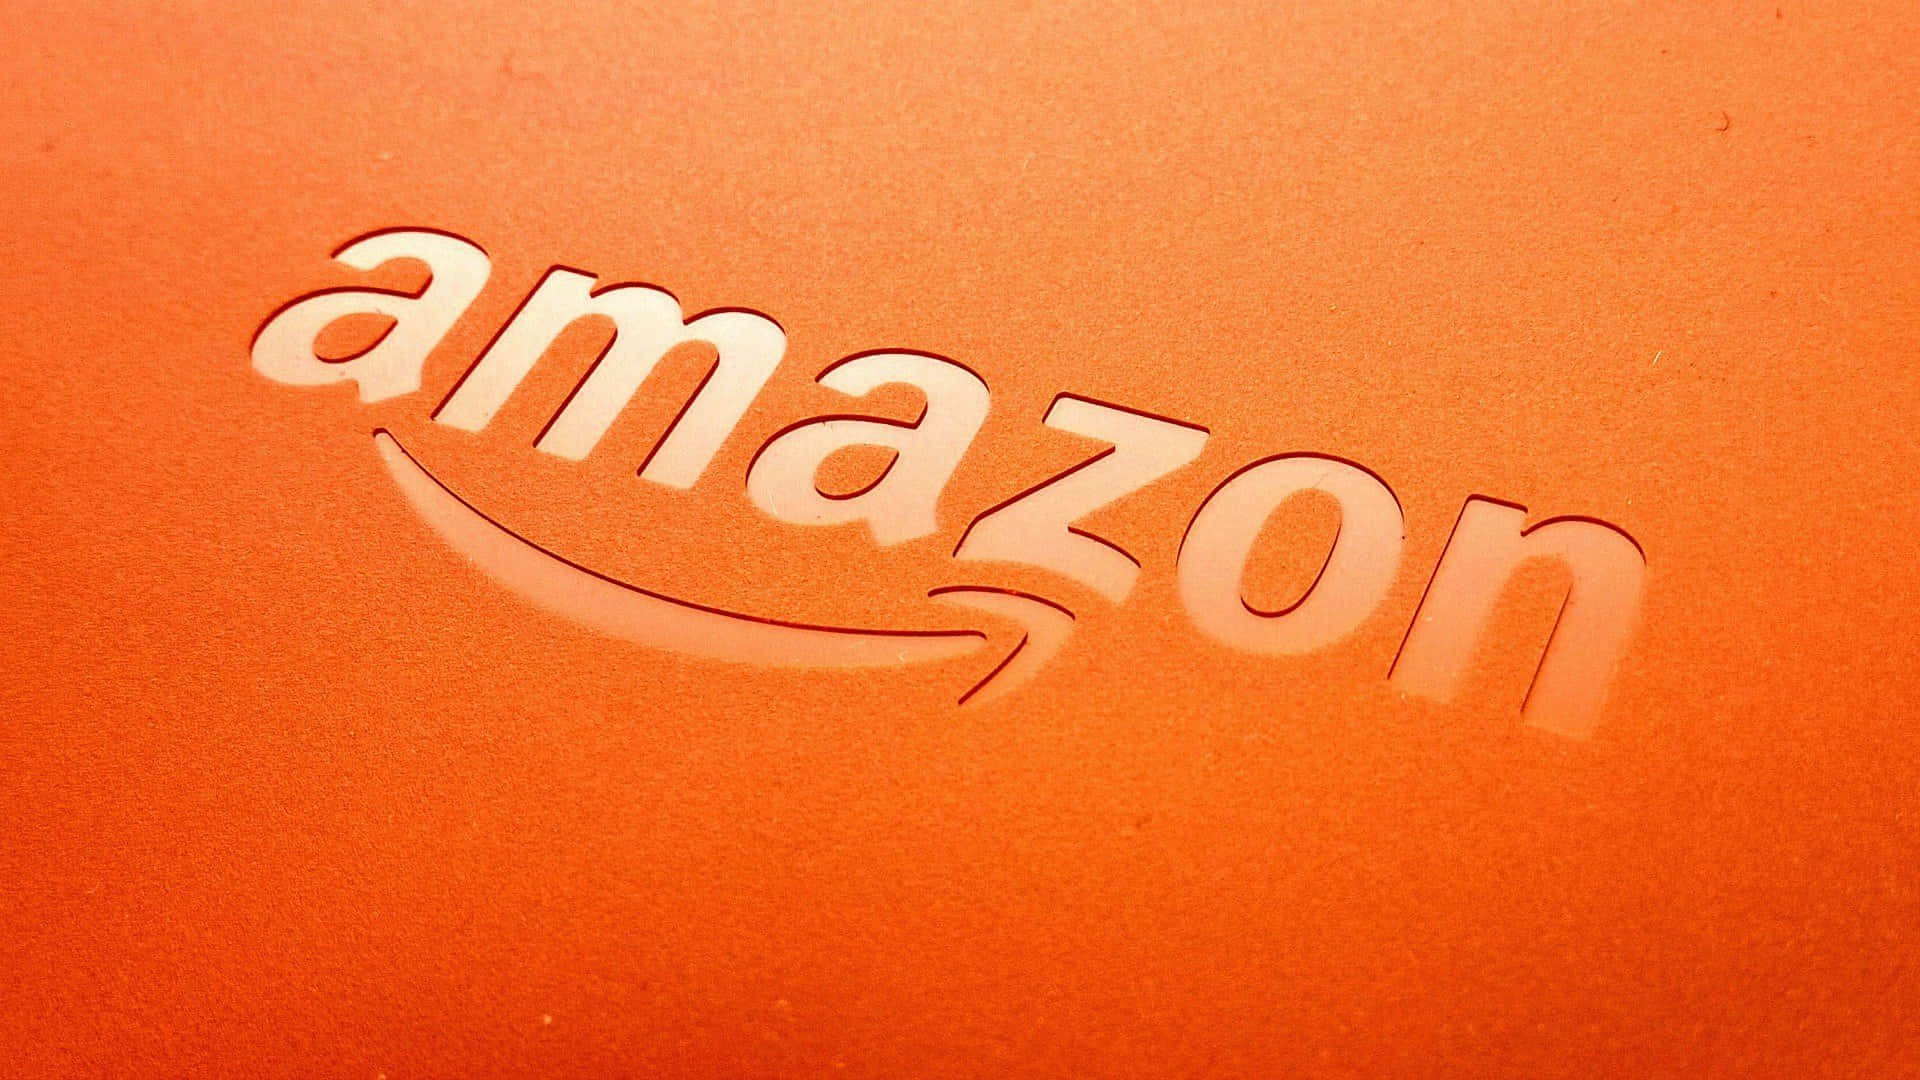 amazon's new logo is shown on an orange background